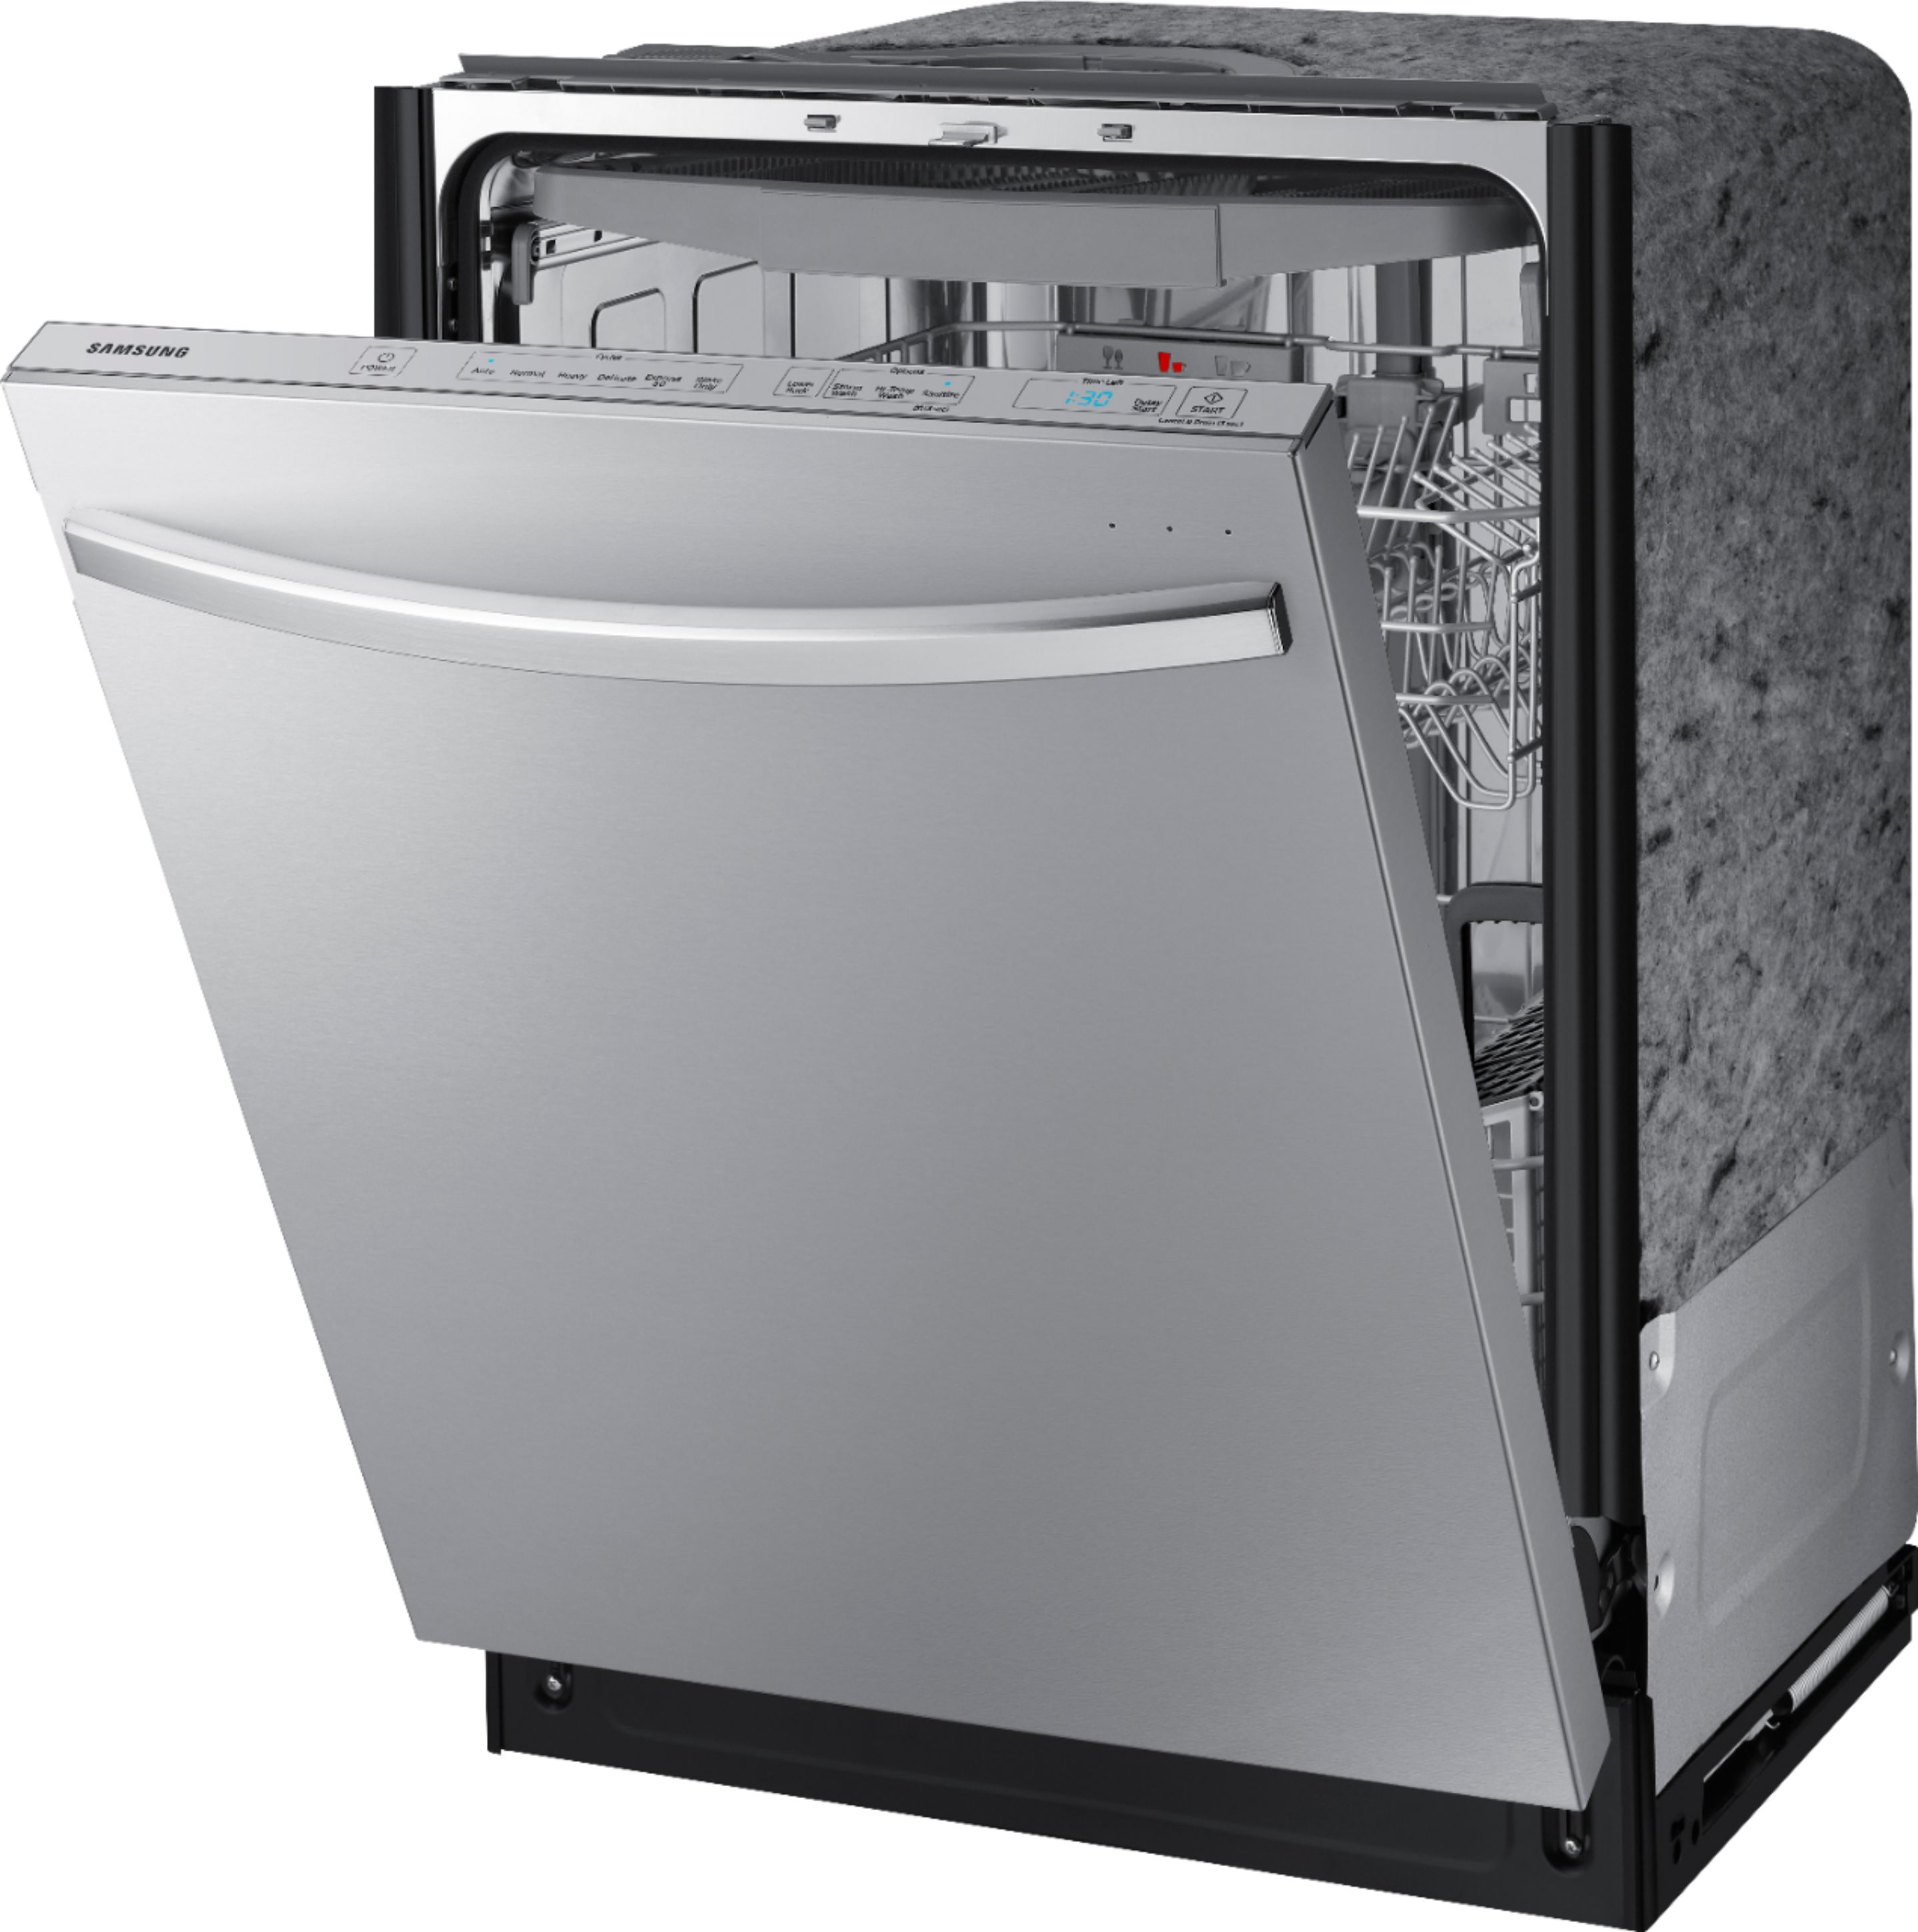 DW80R7061UG/AA, StormWash™ 42 dBA Dishwasher in Black Stainless Steel